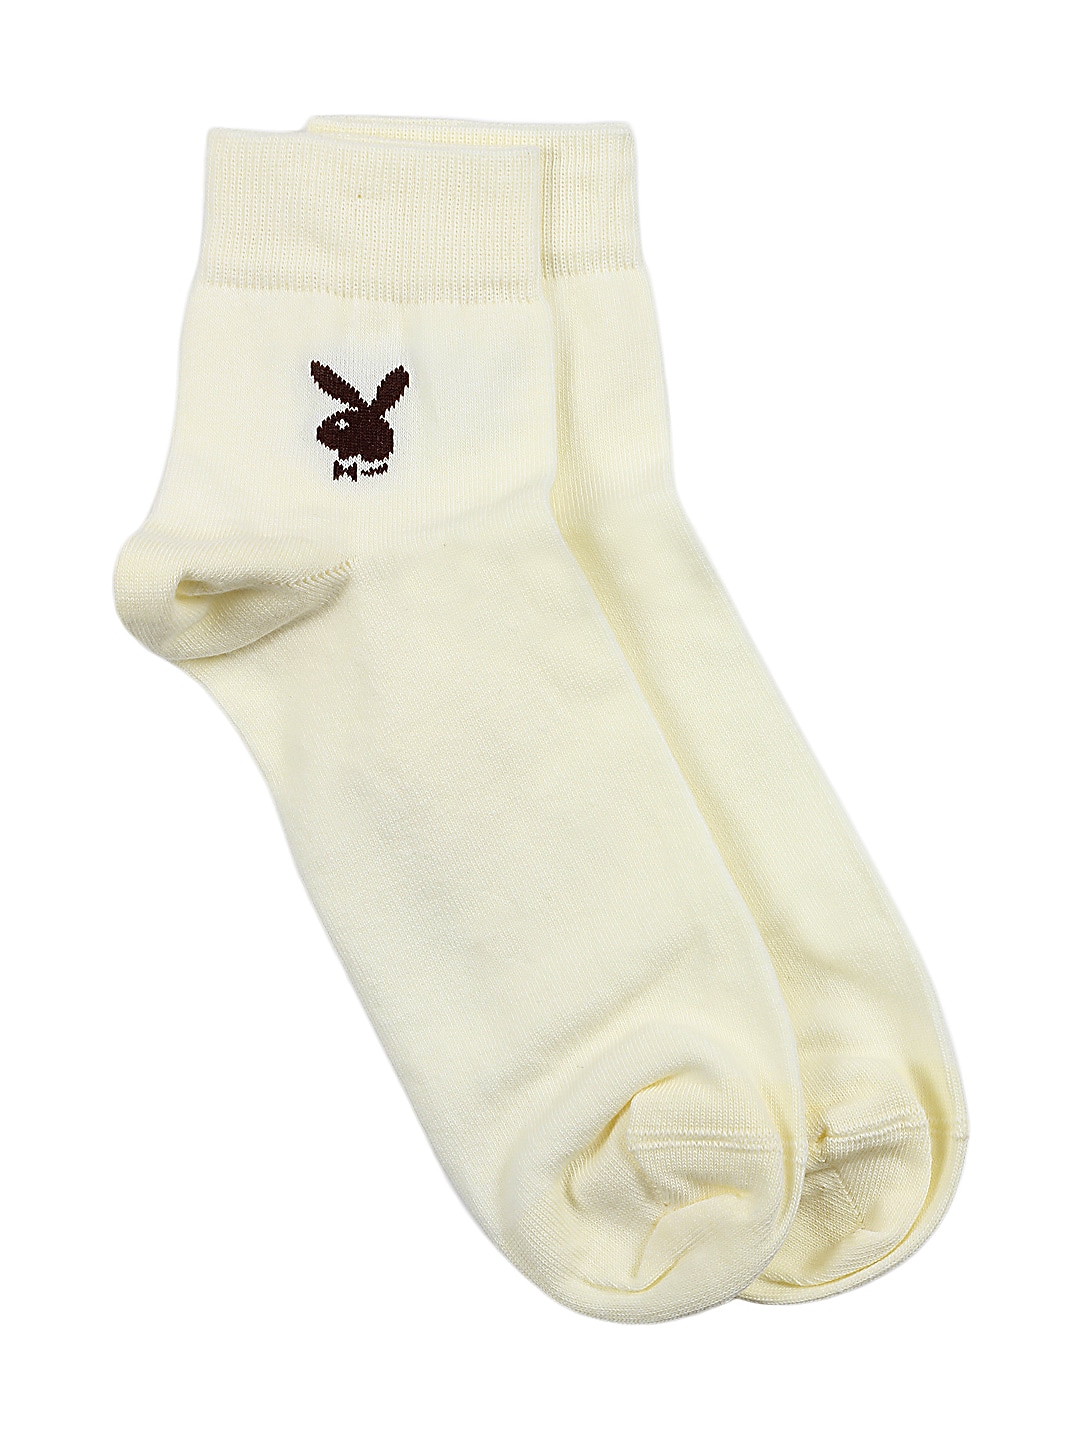 Playboy Men Cream Socks